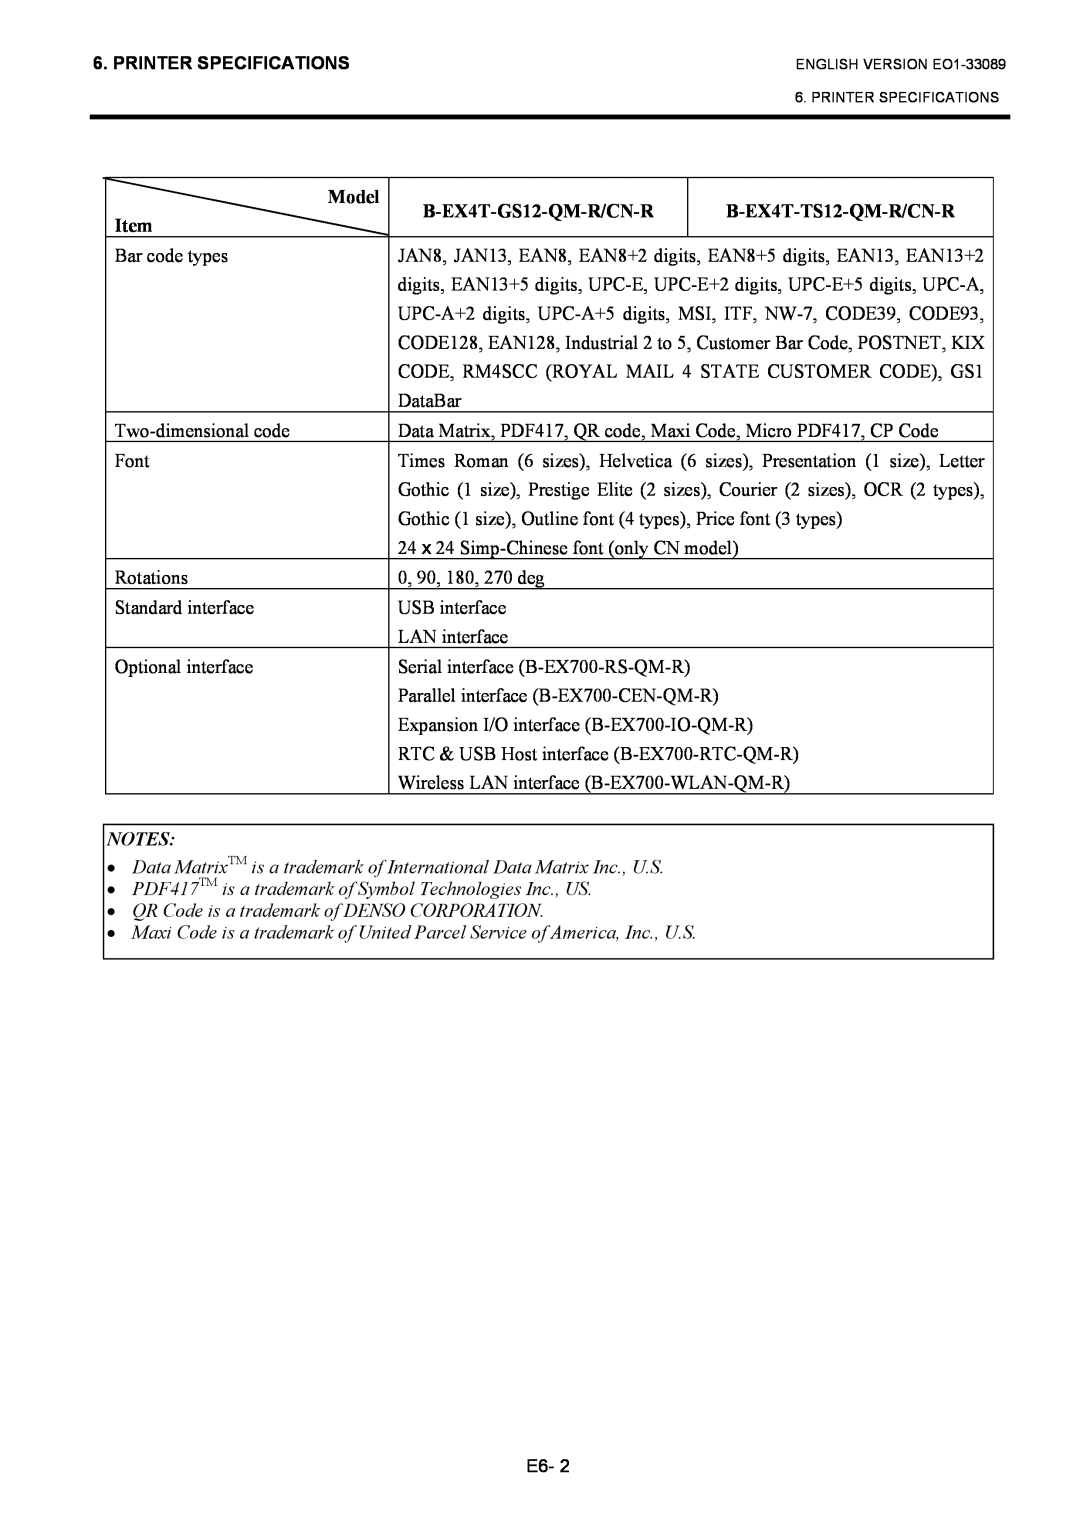 Toshiba B-EX4T1 manual Model, B-EX4T-GS12-QM-R/CN-R, B-EX4T-TS12-QM-R/CN-R, Bar code types 